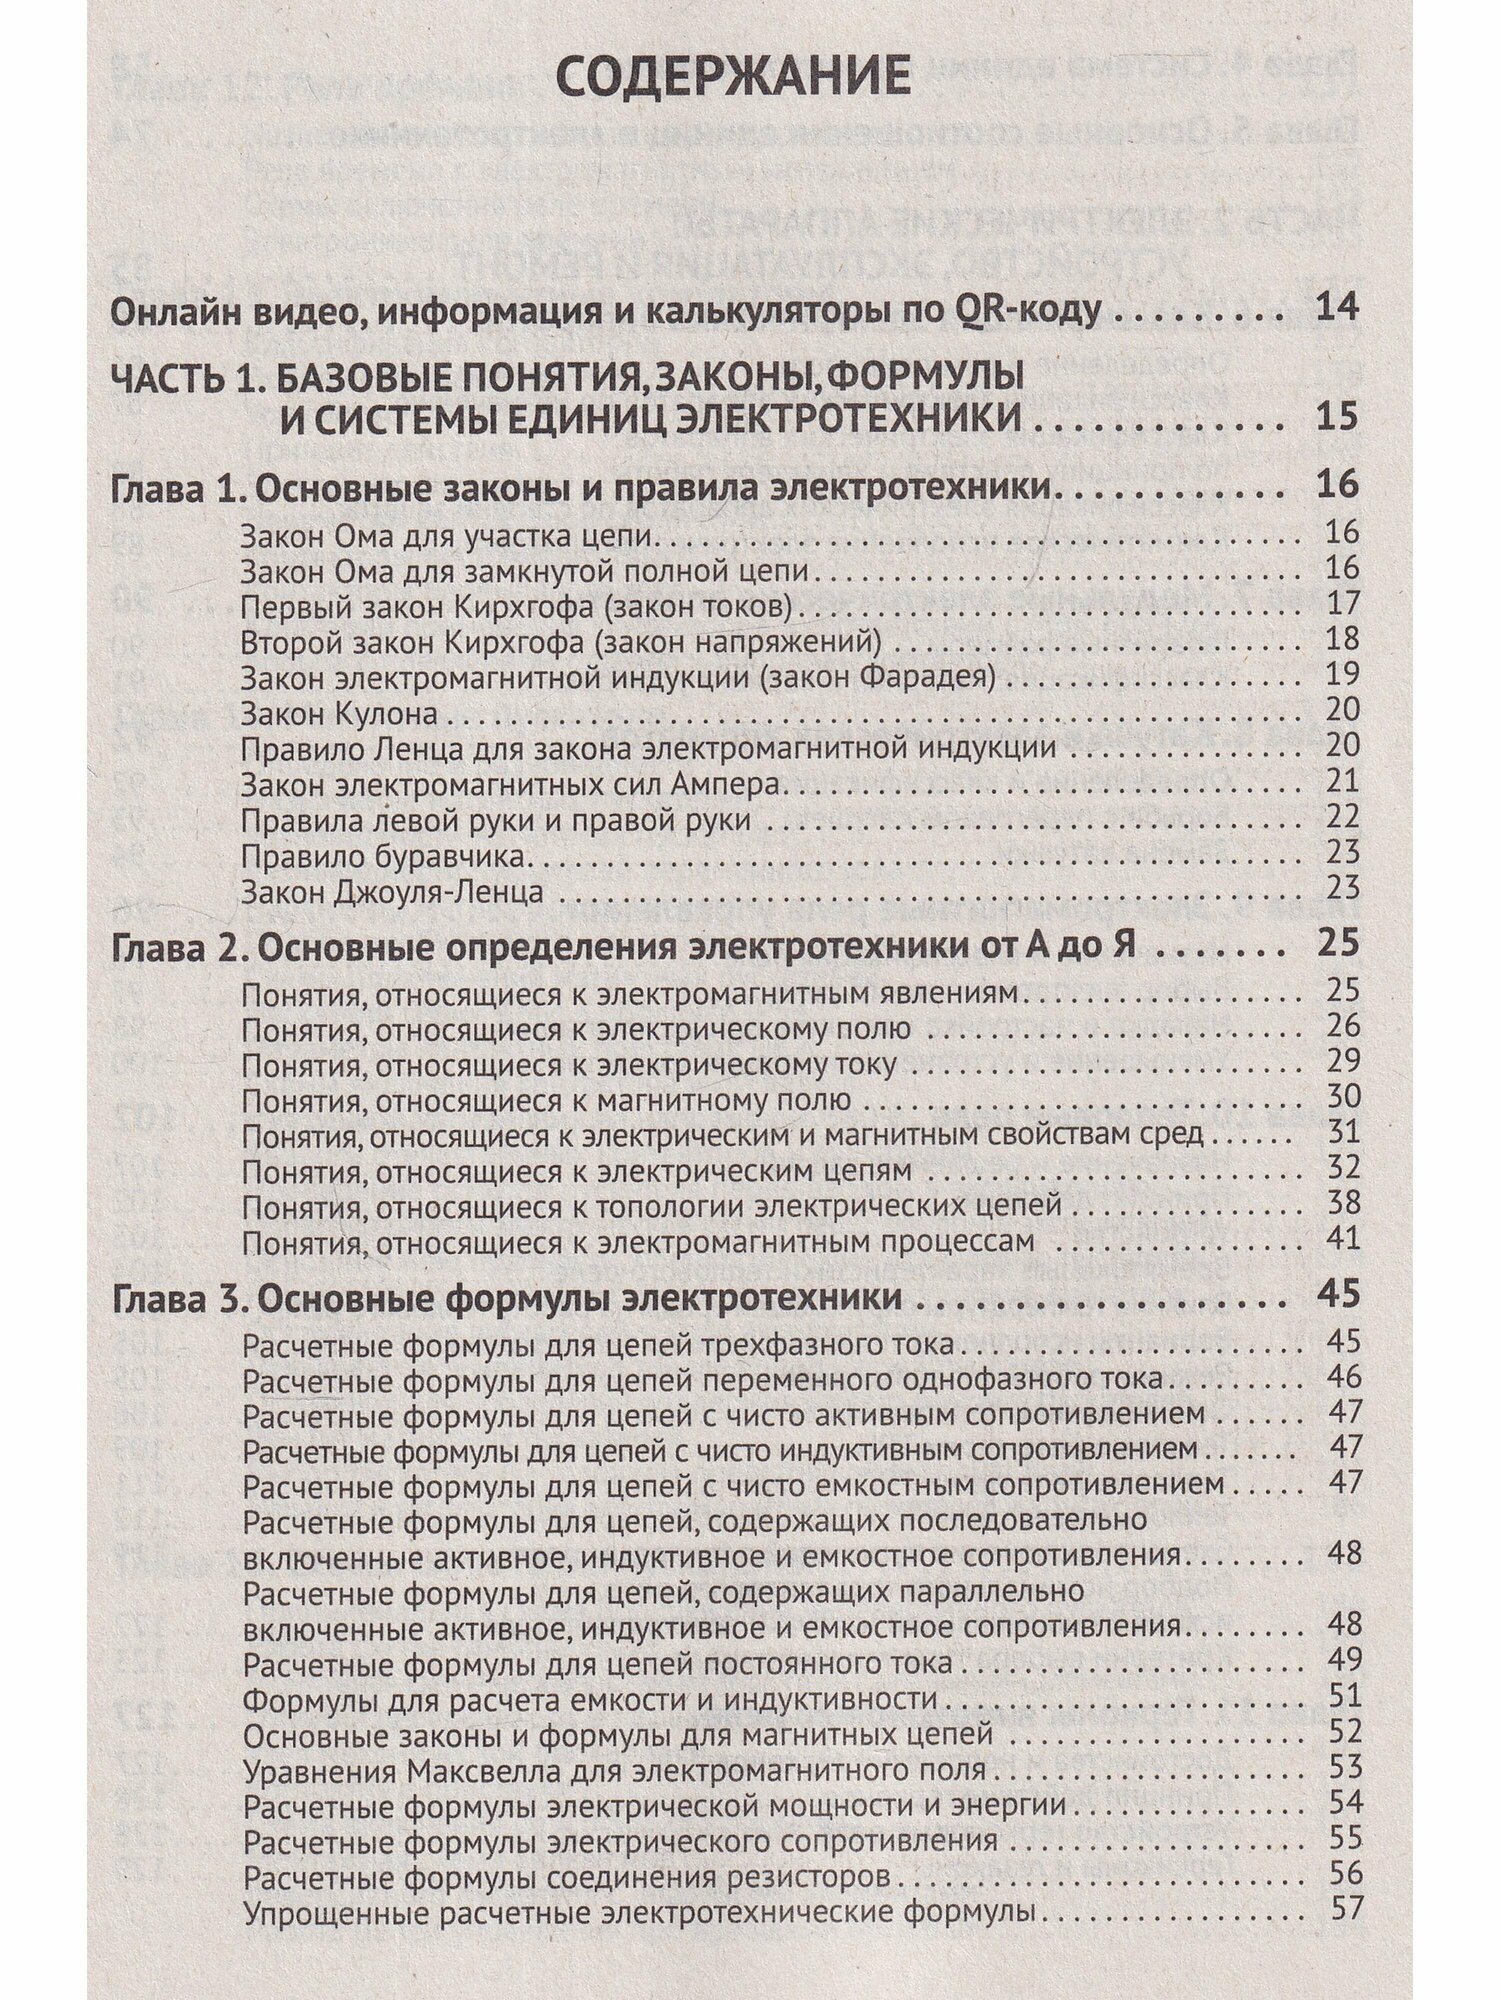 Электротехнический справочник с онлайн ресурсами через QR-коды - фото №5